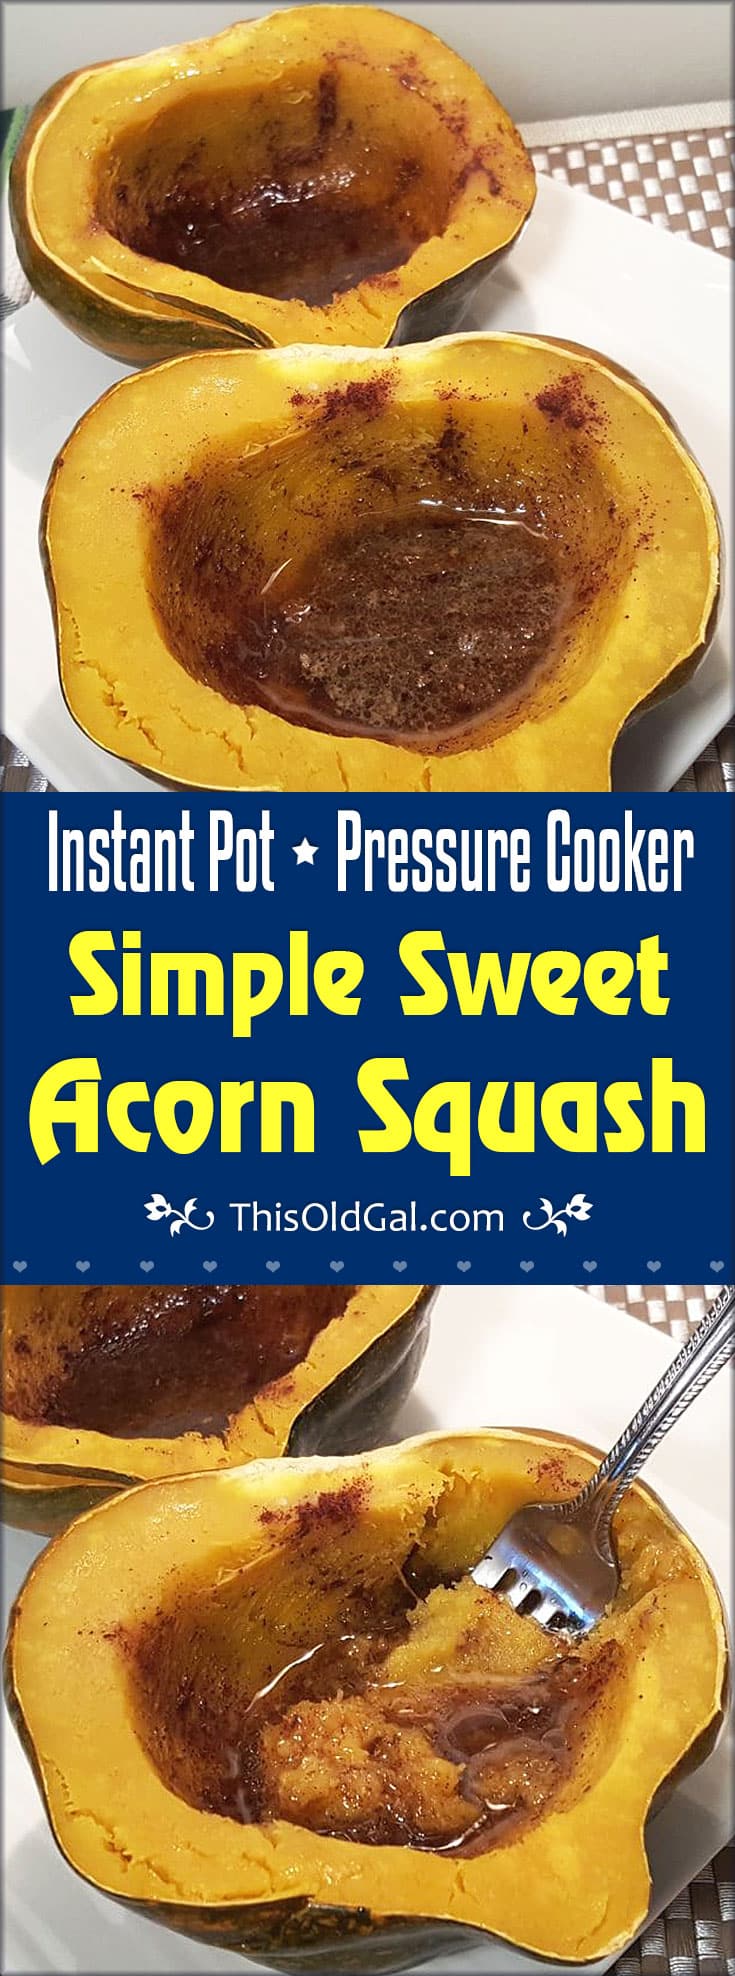 Pressure Cooker Simple Sweet Acorn Squash (Instant Pot)